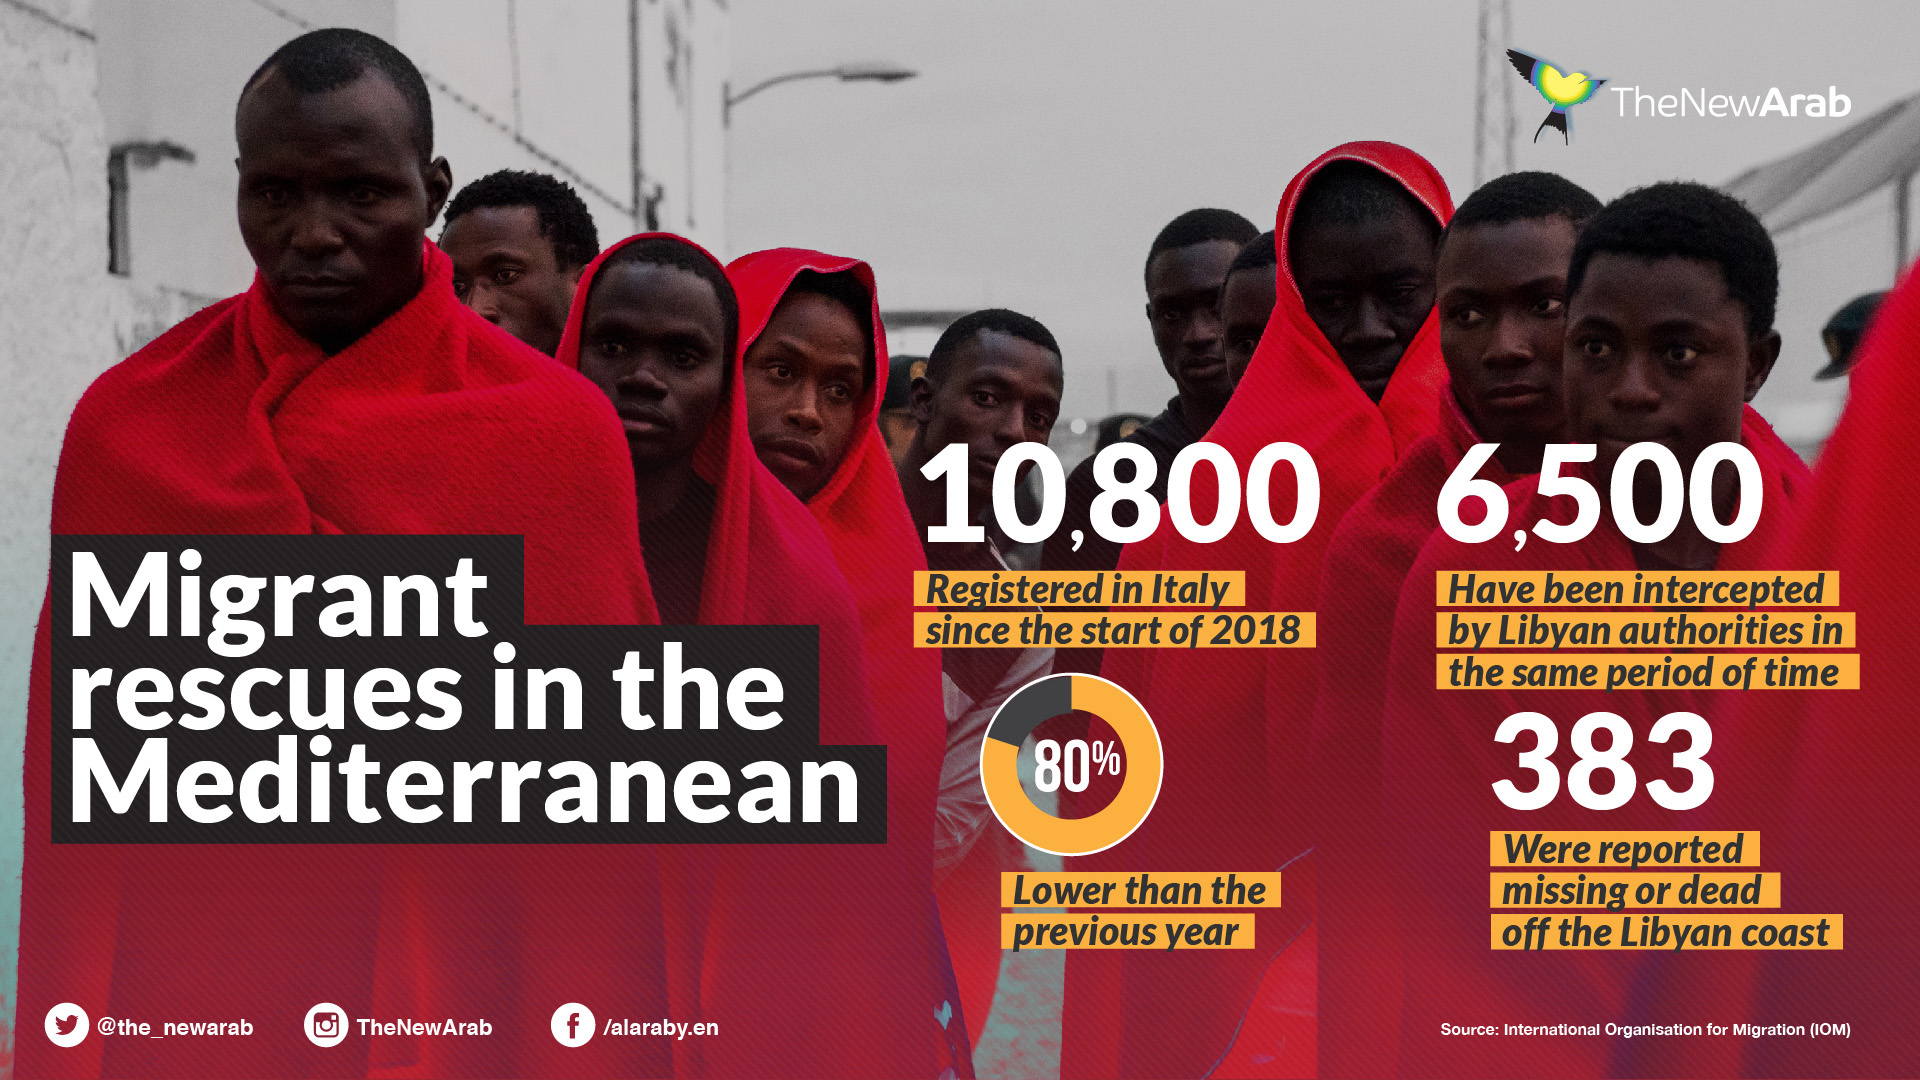 Migrant rescues in the Mediterranean